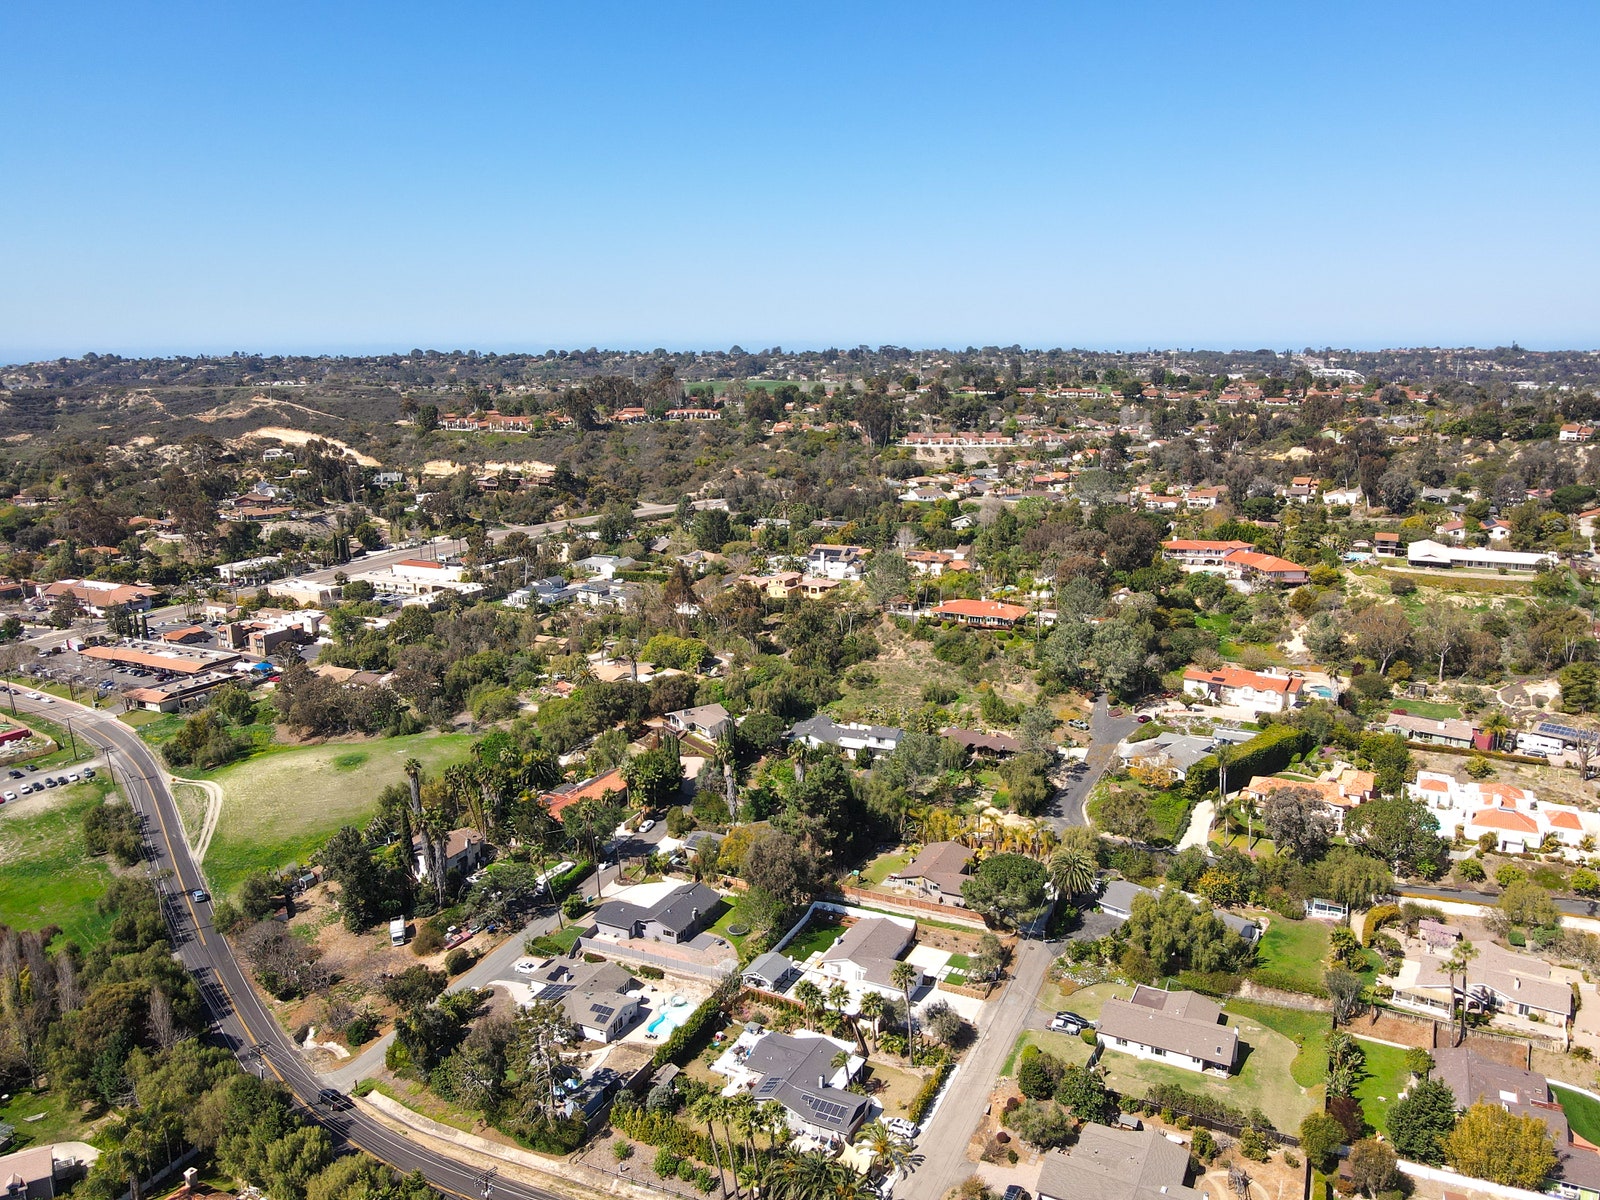 aerial view of Rancho Santa Fe where Russell Wilson and Ciara maintain a property